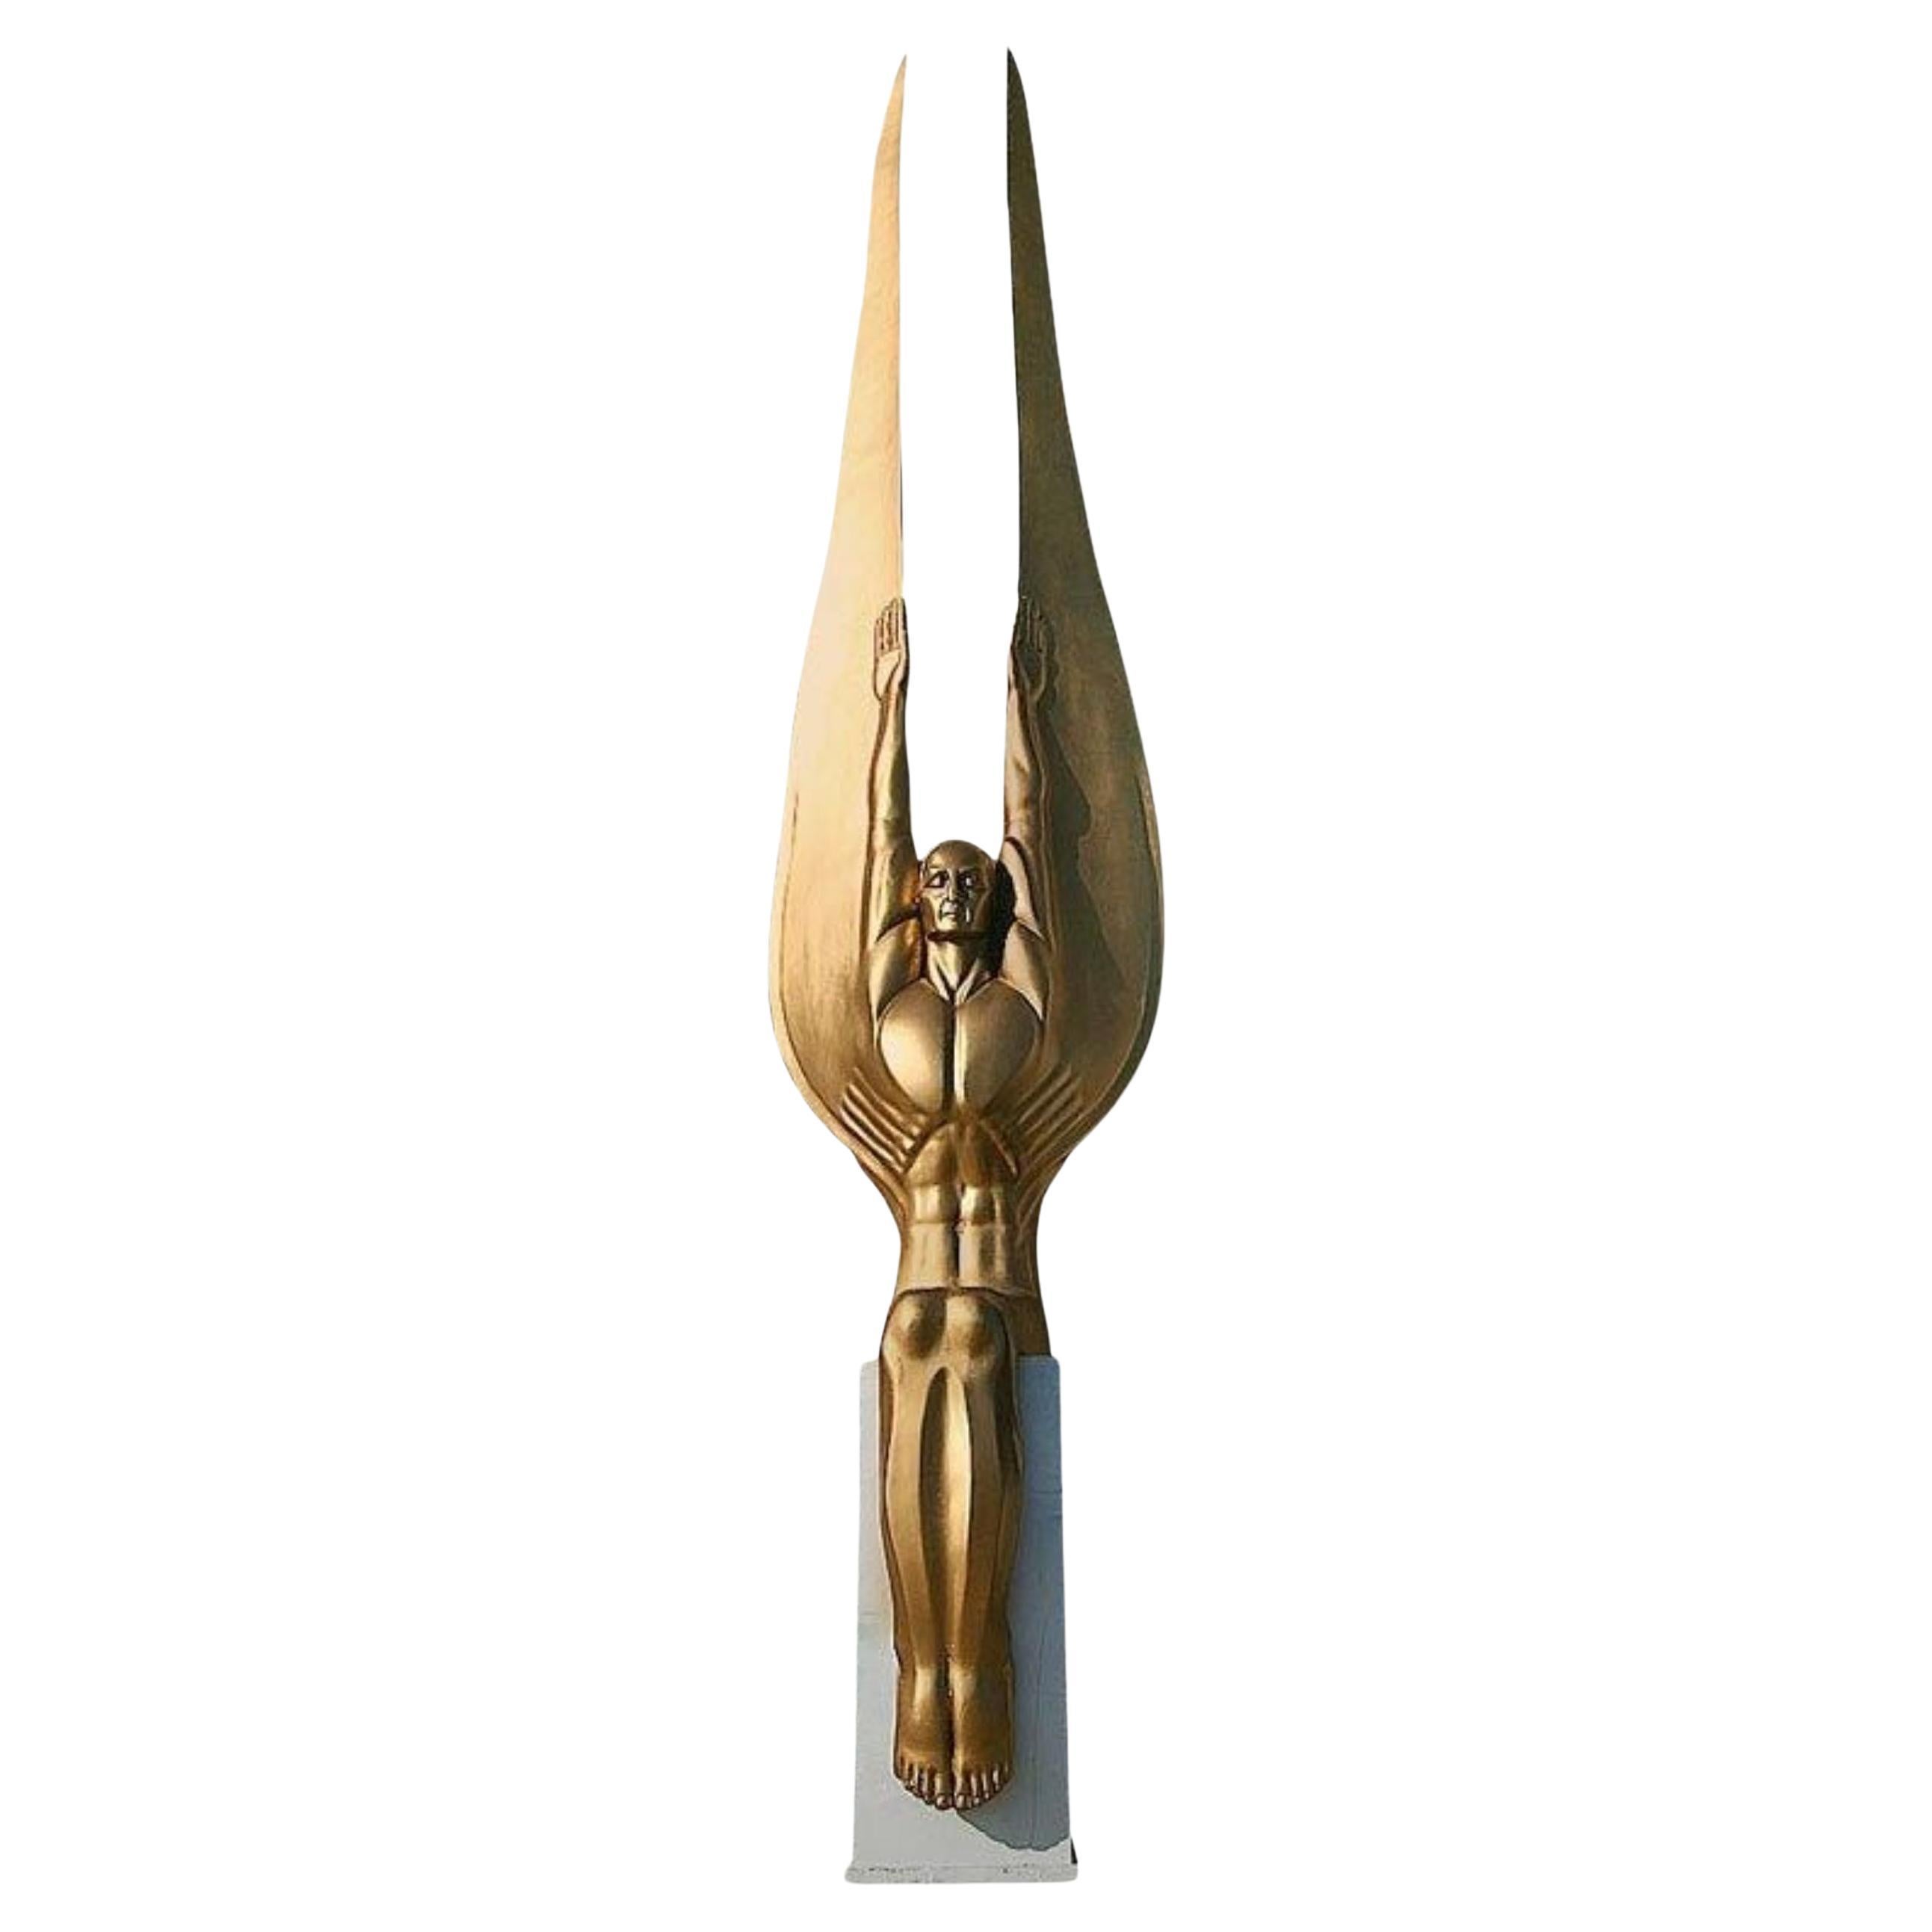 Art Deco Style Angel Sculpture "Wings of the Republic" by Oskar J.W. Hansen  For Sale at 1stDibs